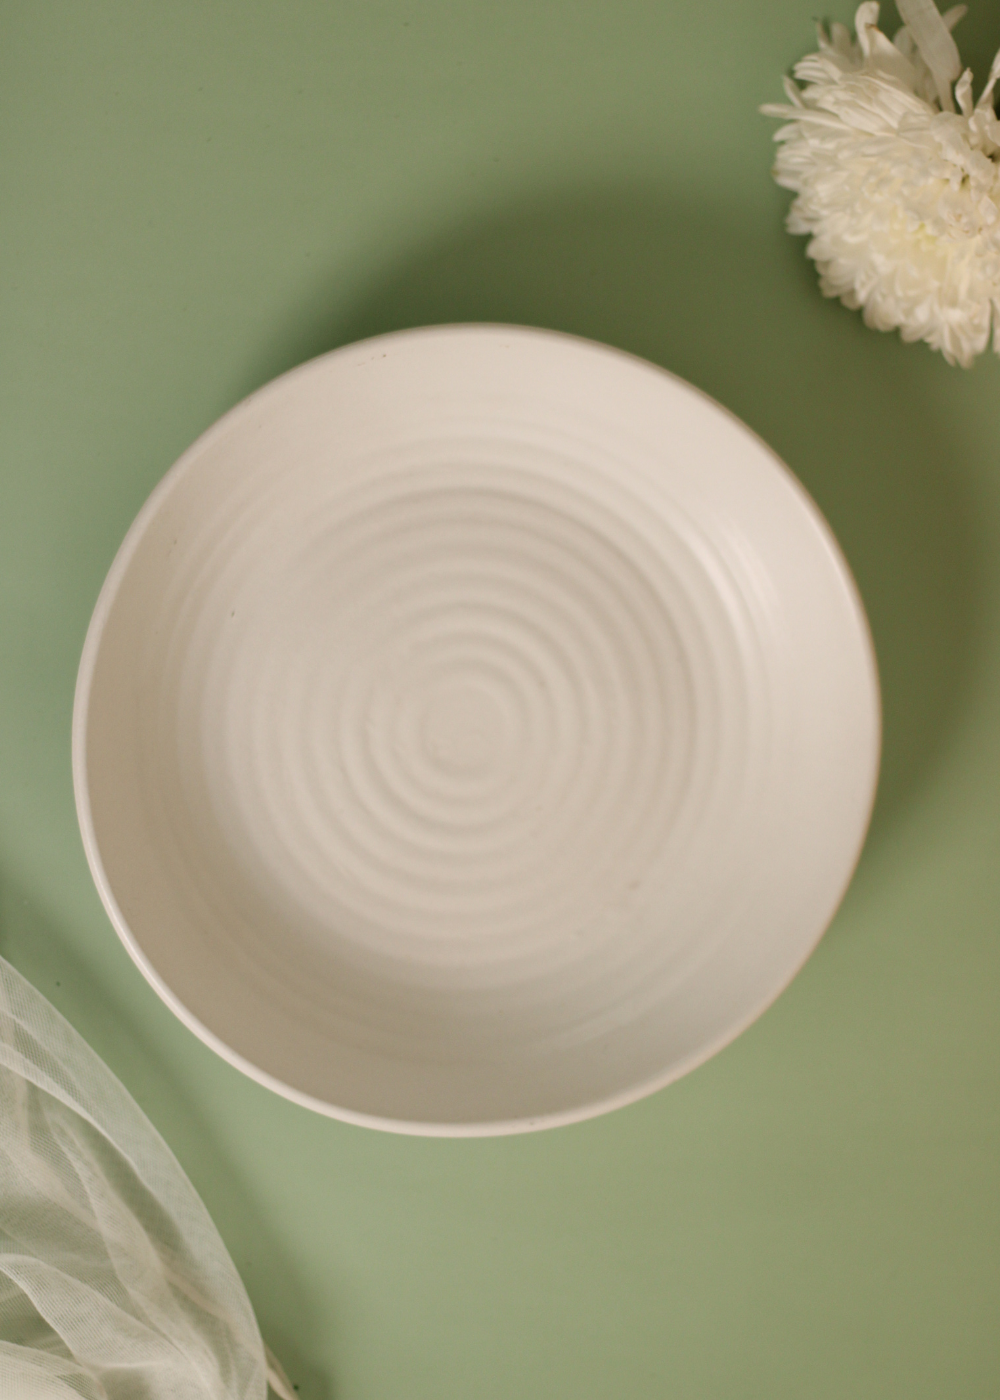 Handmade ceramic white spiral pasta plate